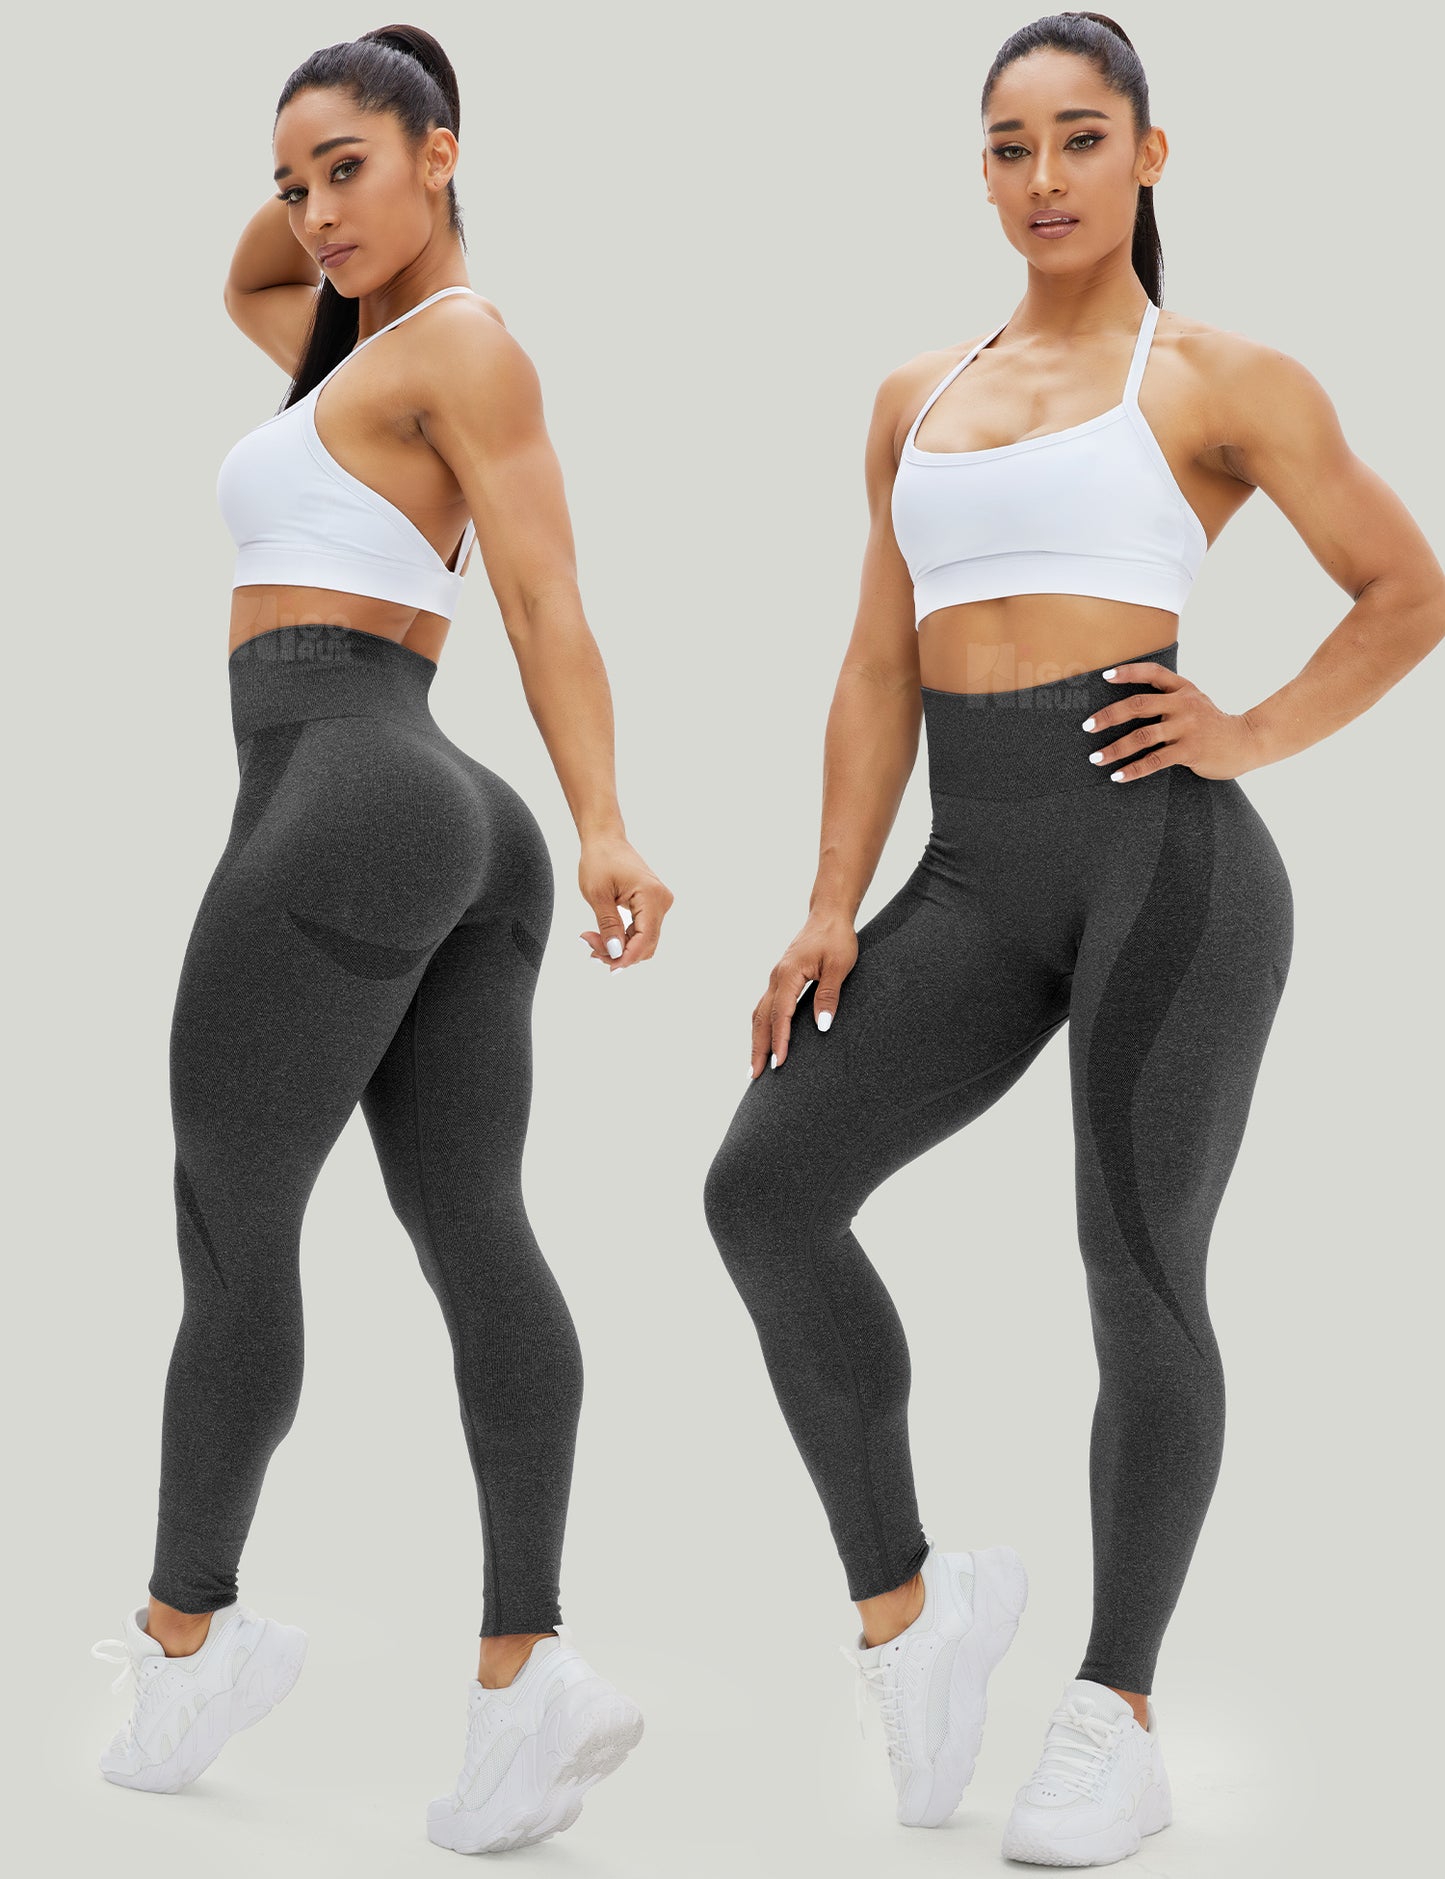 HIGORUN Women Seamless Leggings Smile Contour High Waist Workout Gym Yoga Pants gray